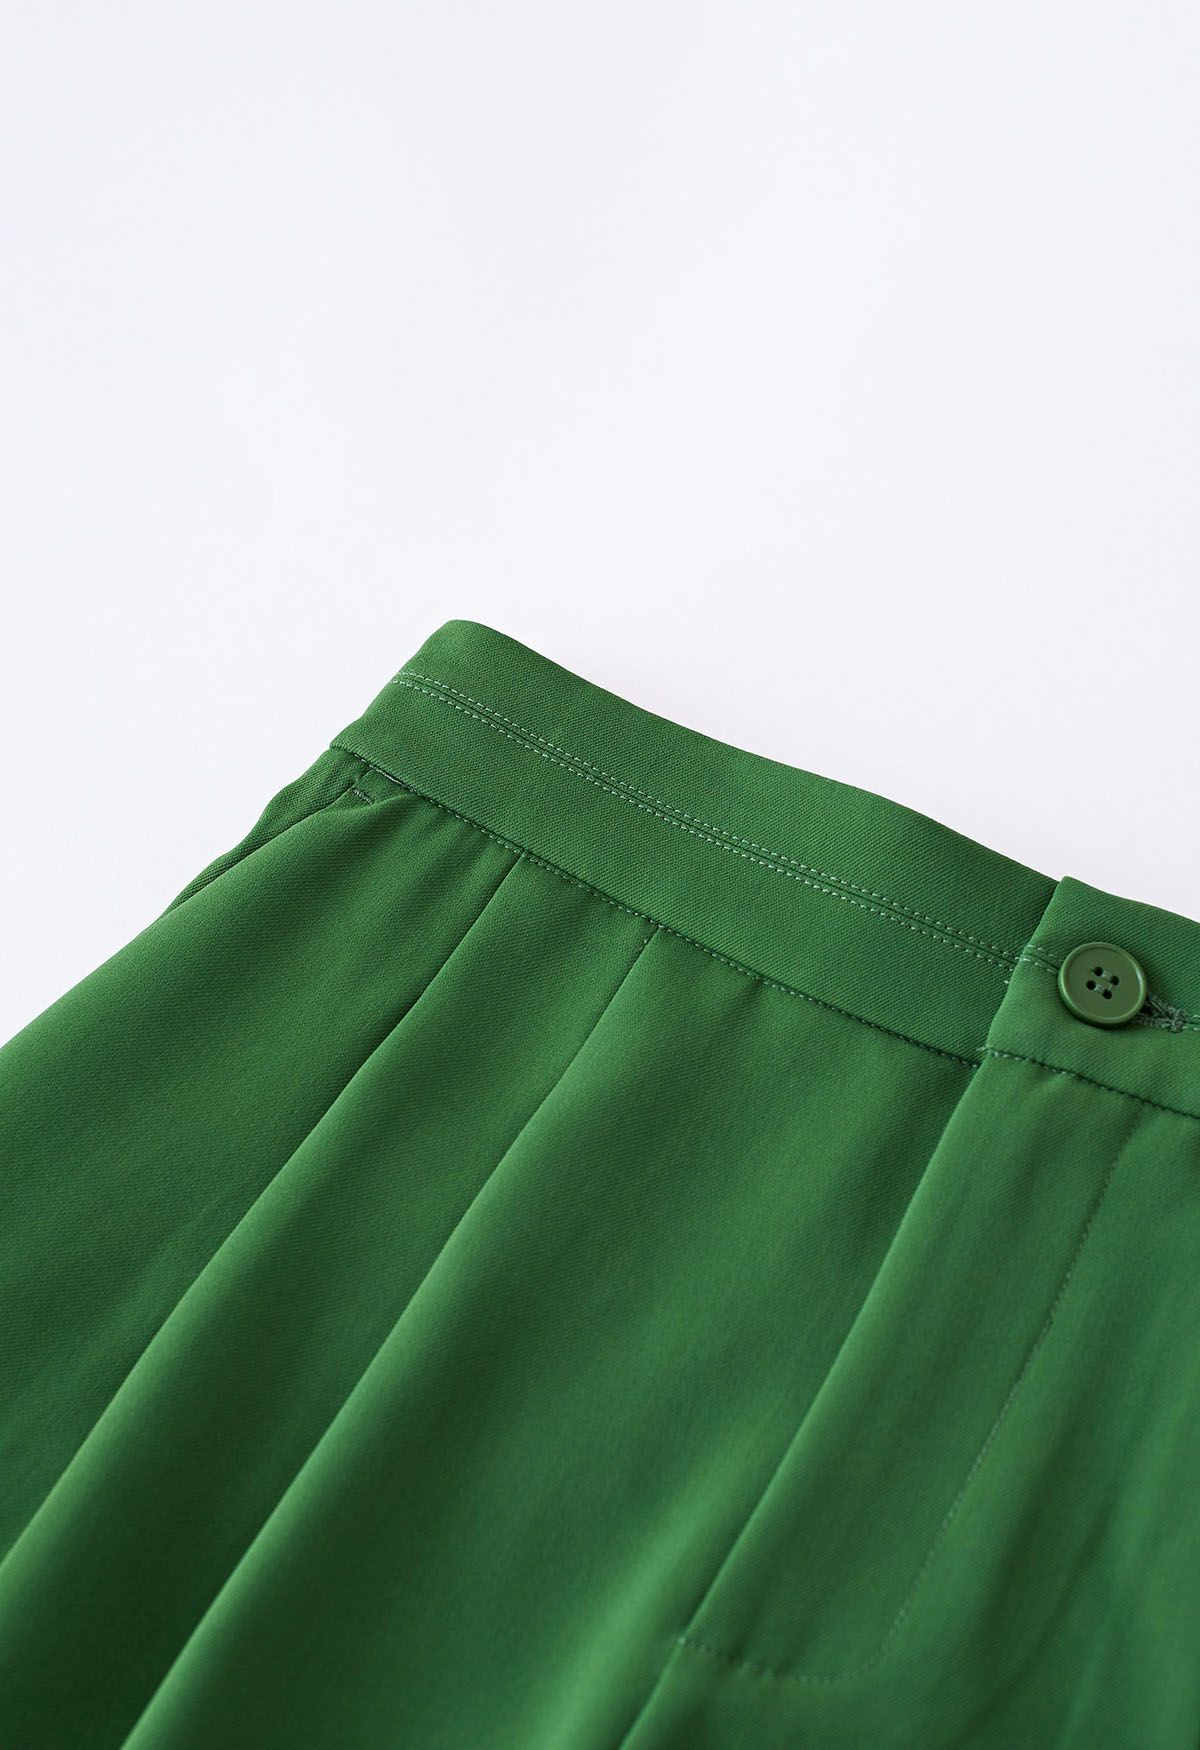 Simple Pleat Straight-Leg Pants in Green